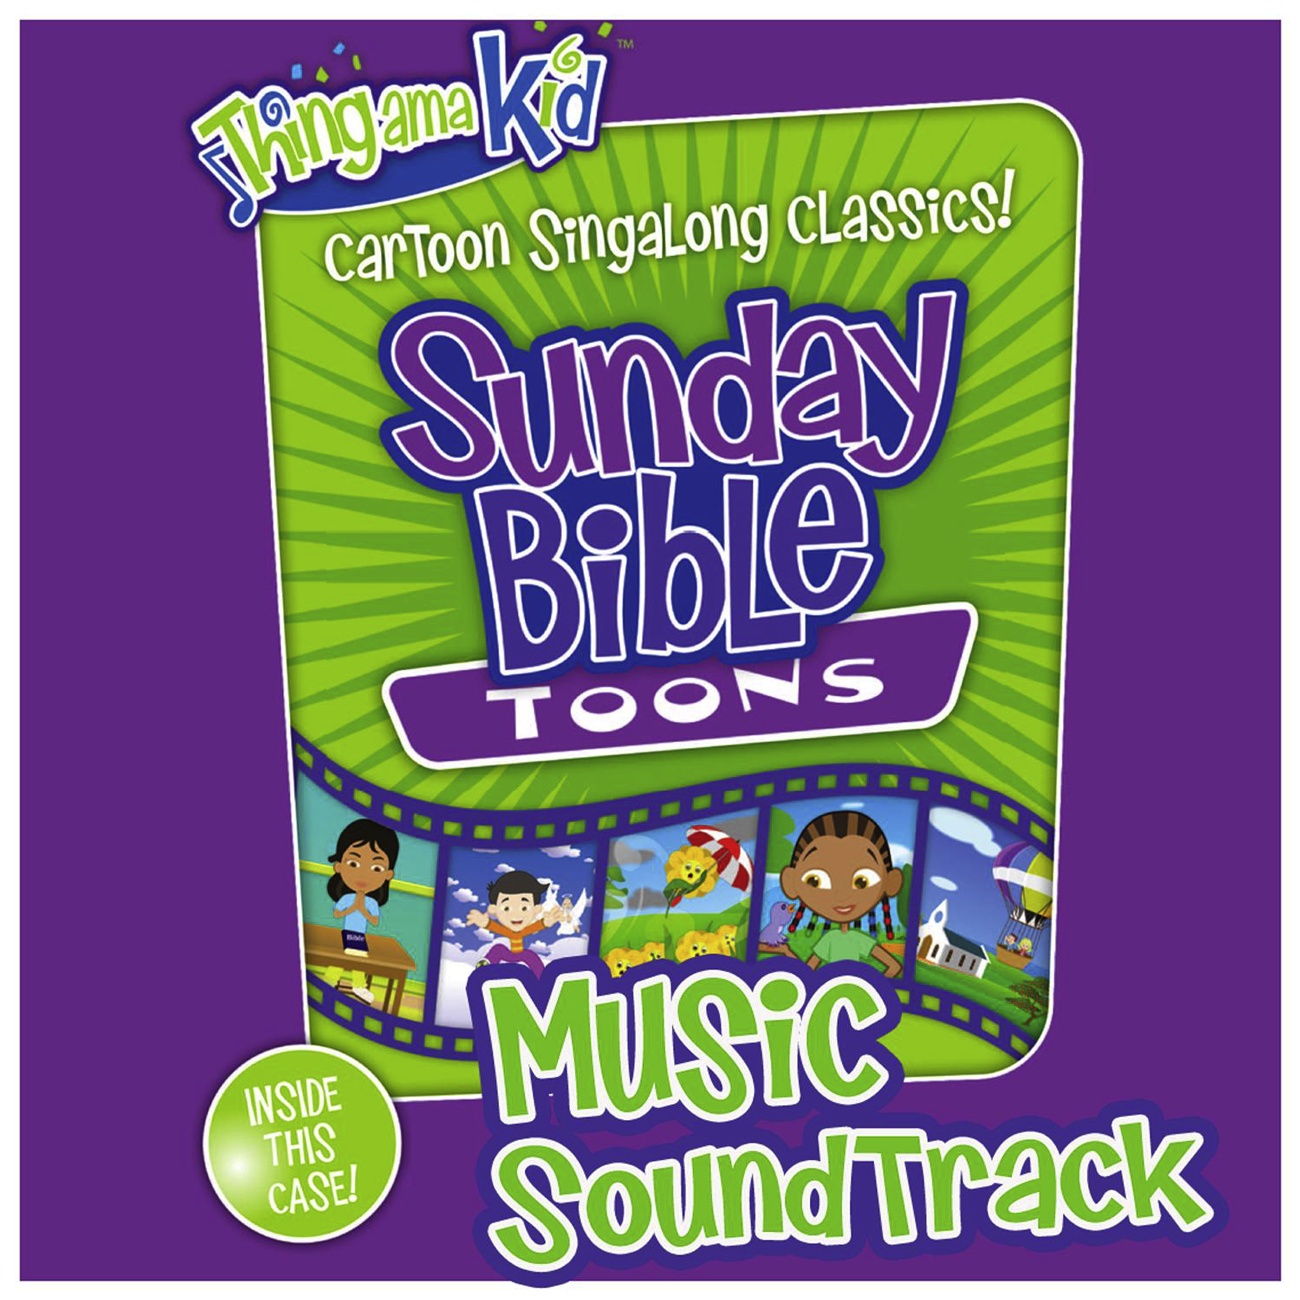 The B-i-b-l-e (Sunday Bible Toons Music Album Version)